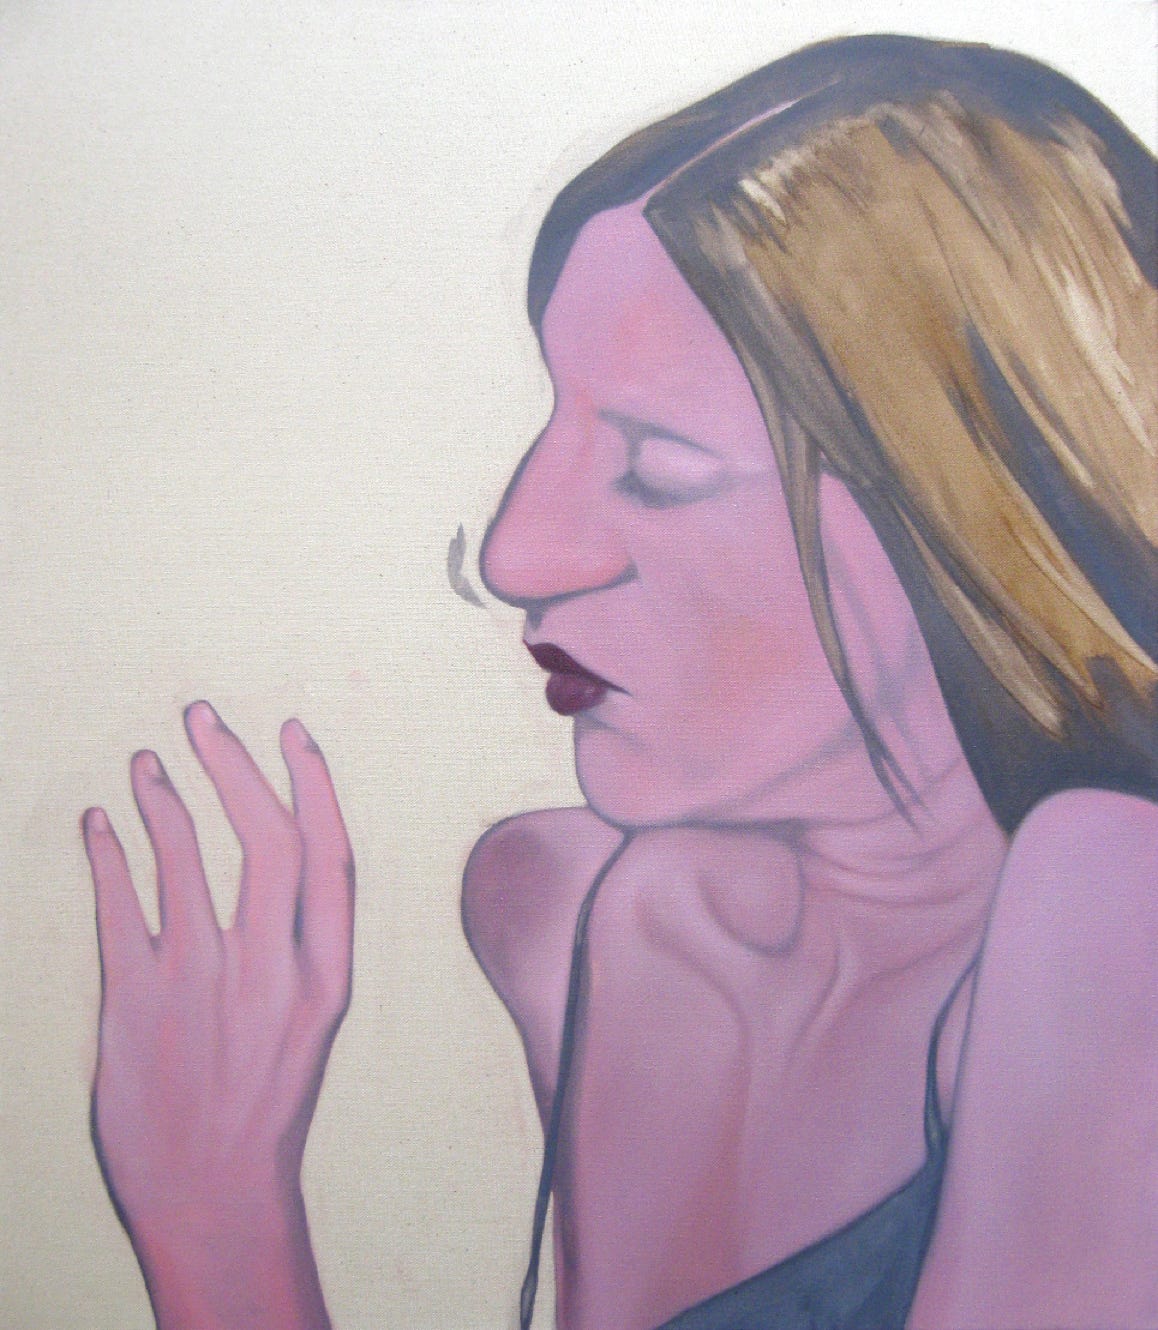 70x60 cm, oil on canvas, 2012